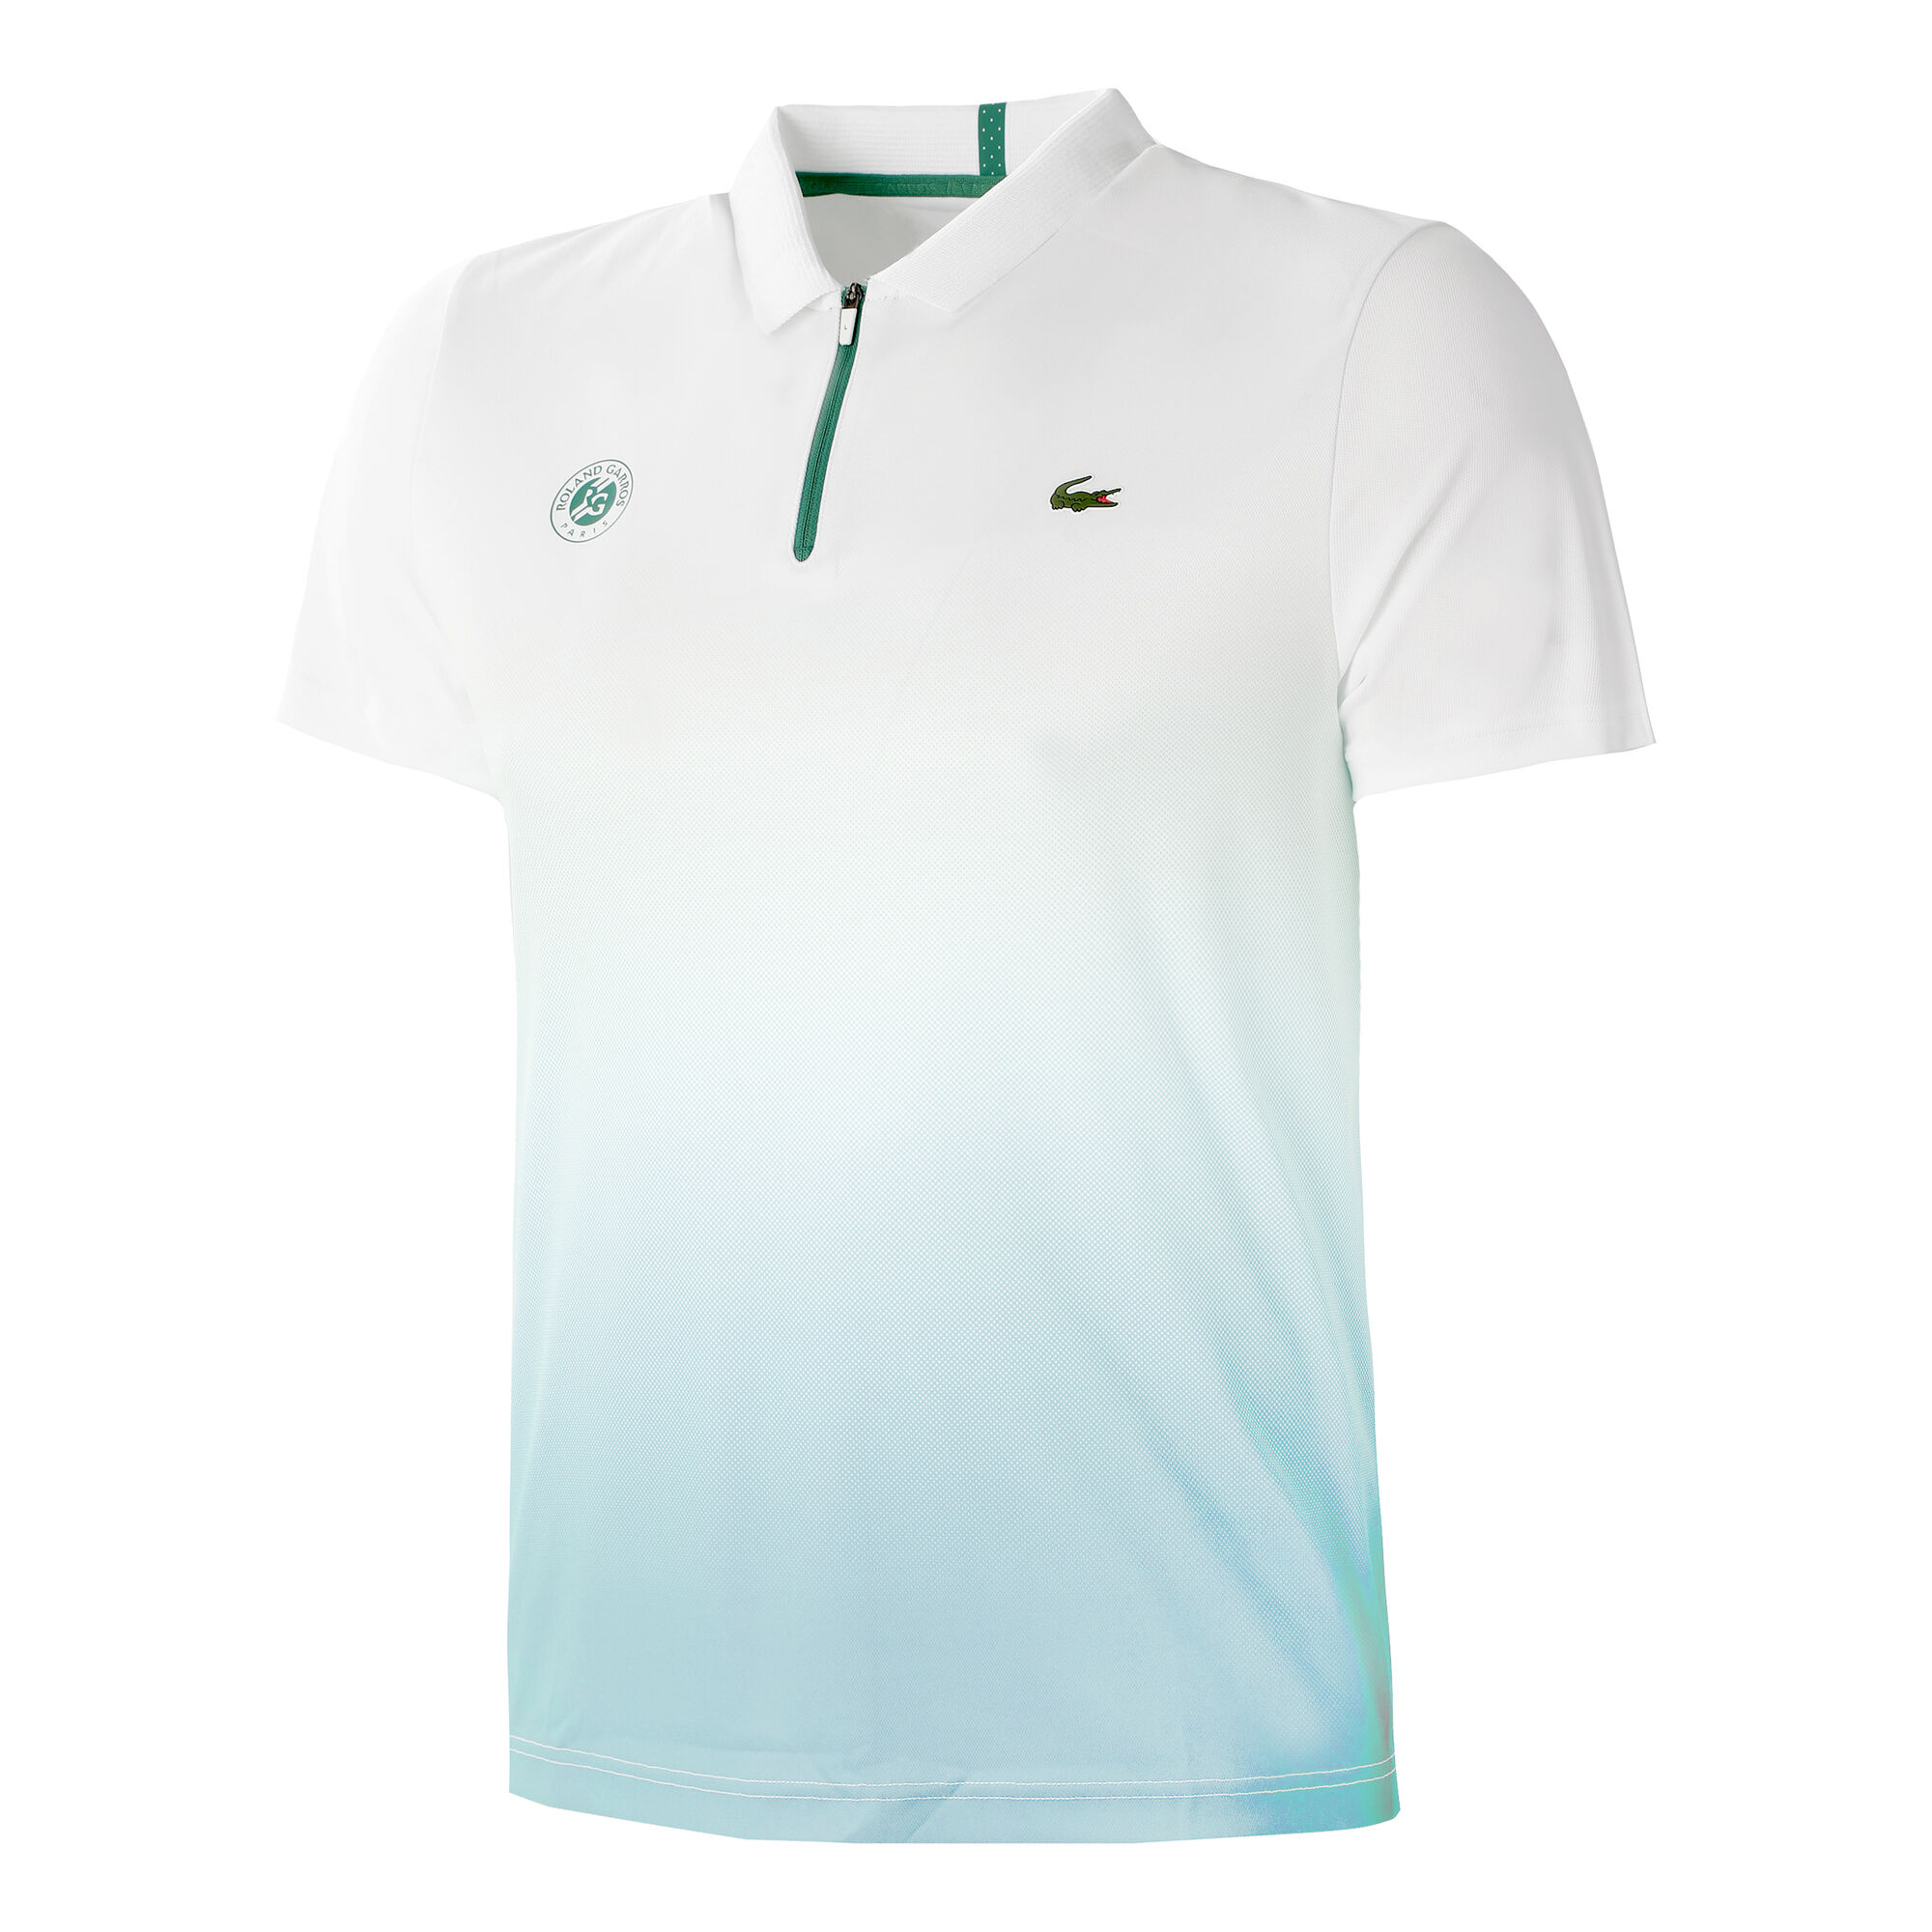 Lacoste Roland Garros Hombres Azul compra online | Tennis-Point